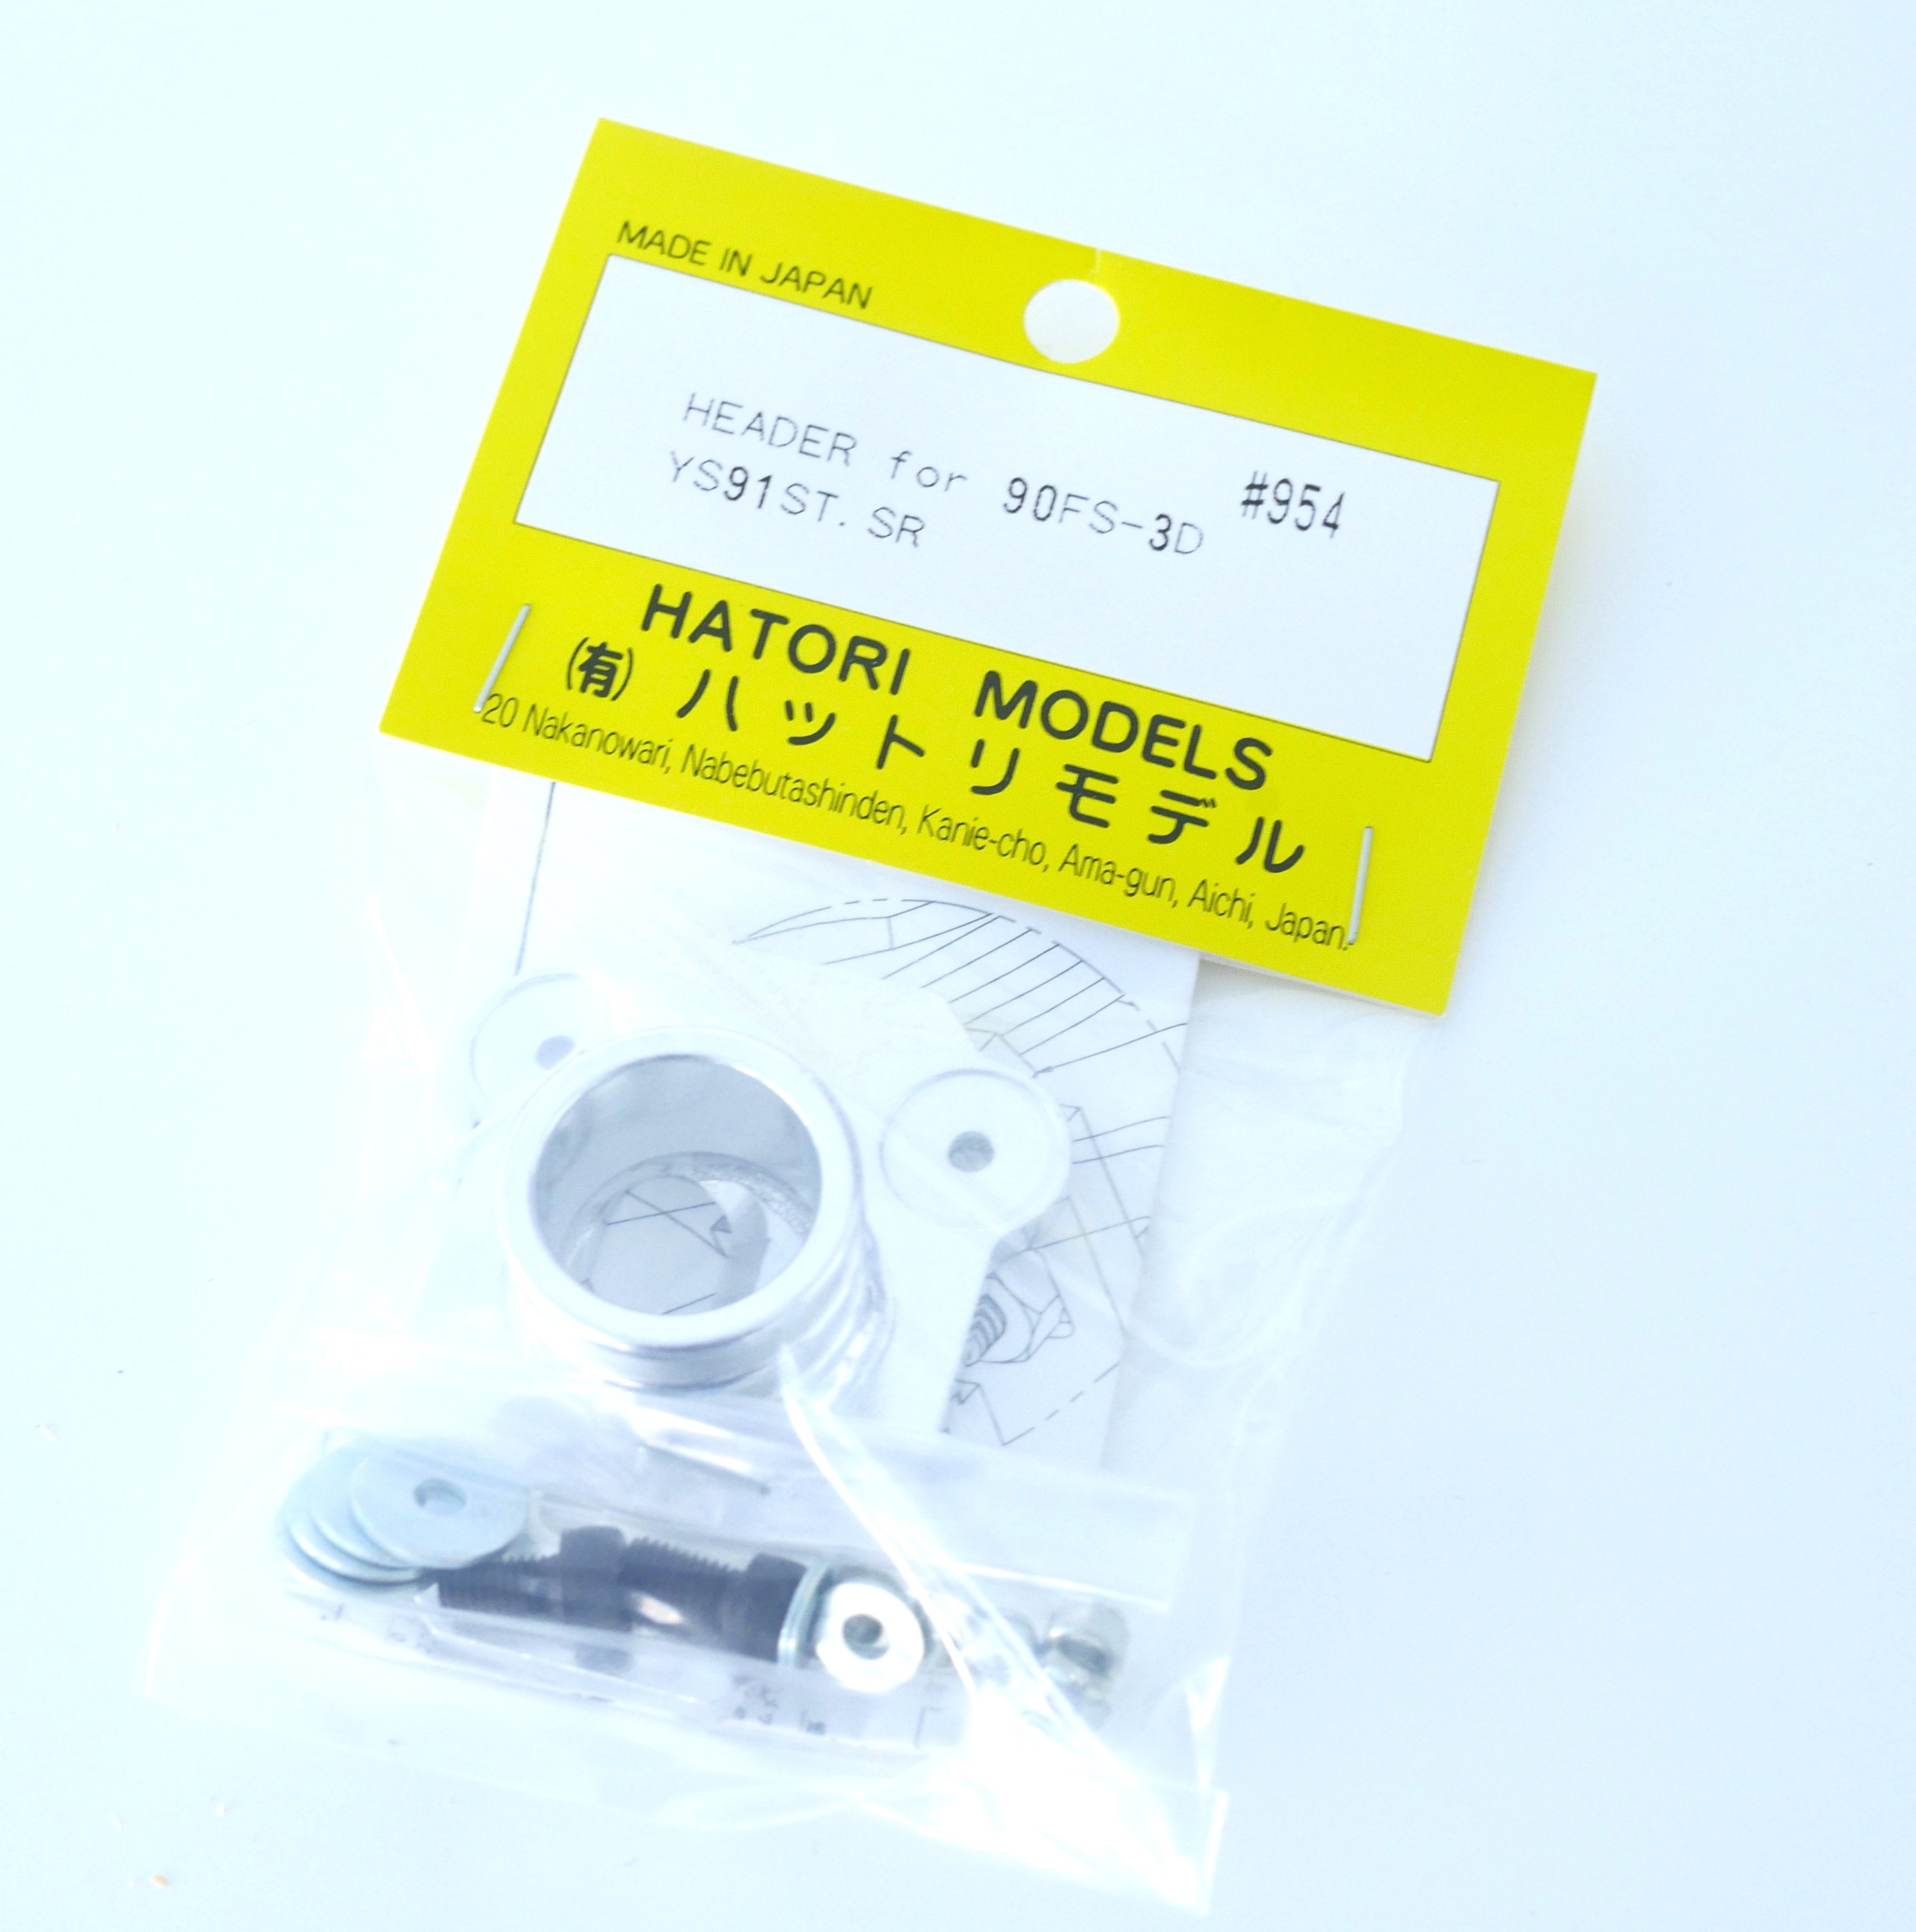 Hatori 954 Header for 937,946 (YS91ST. SR)